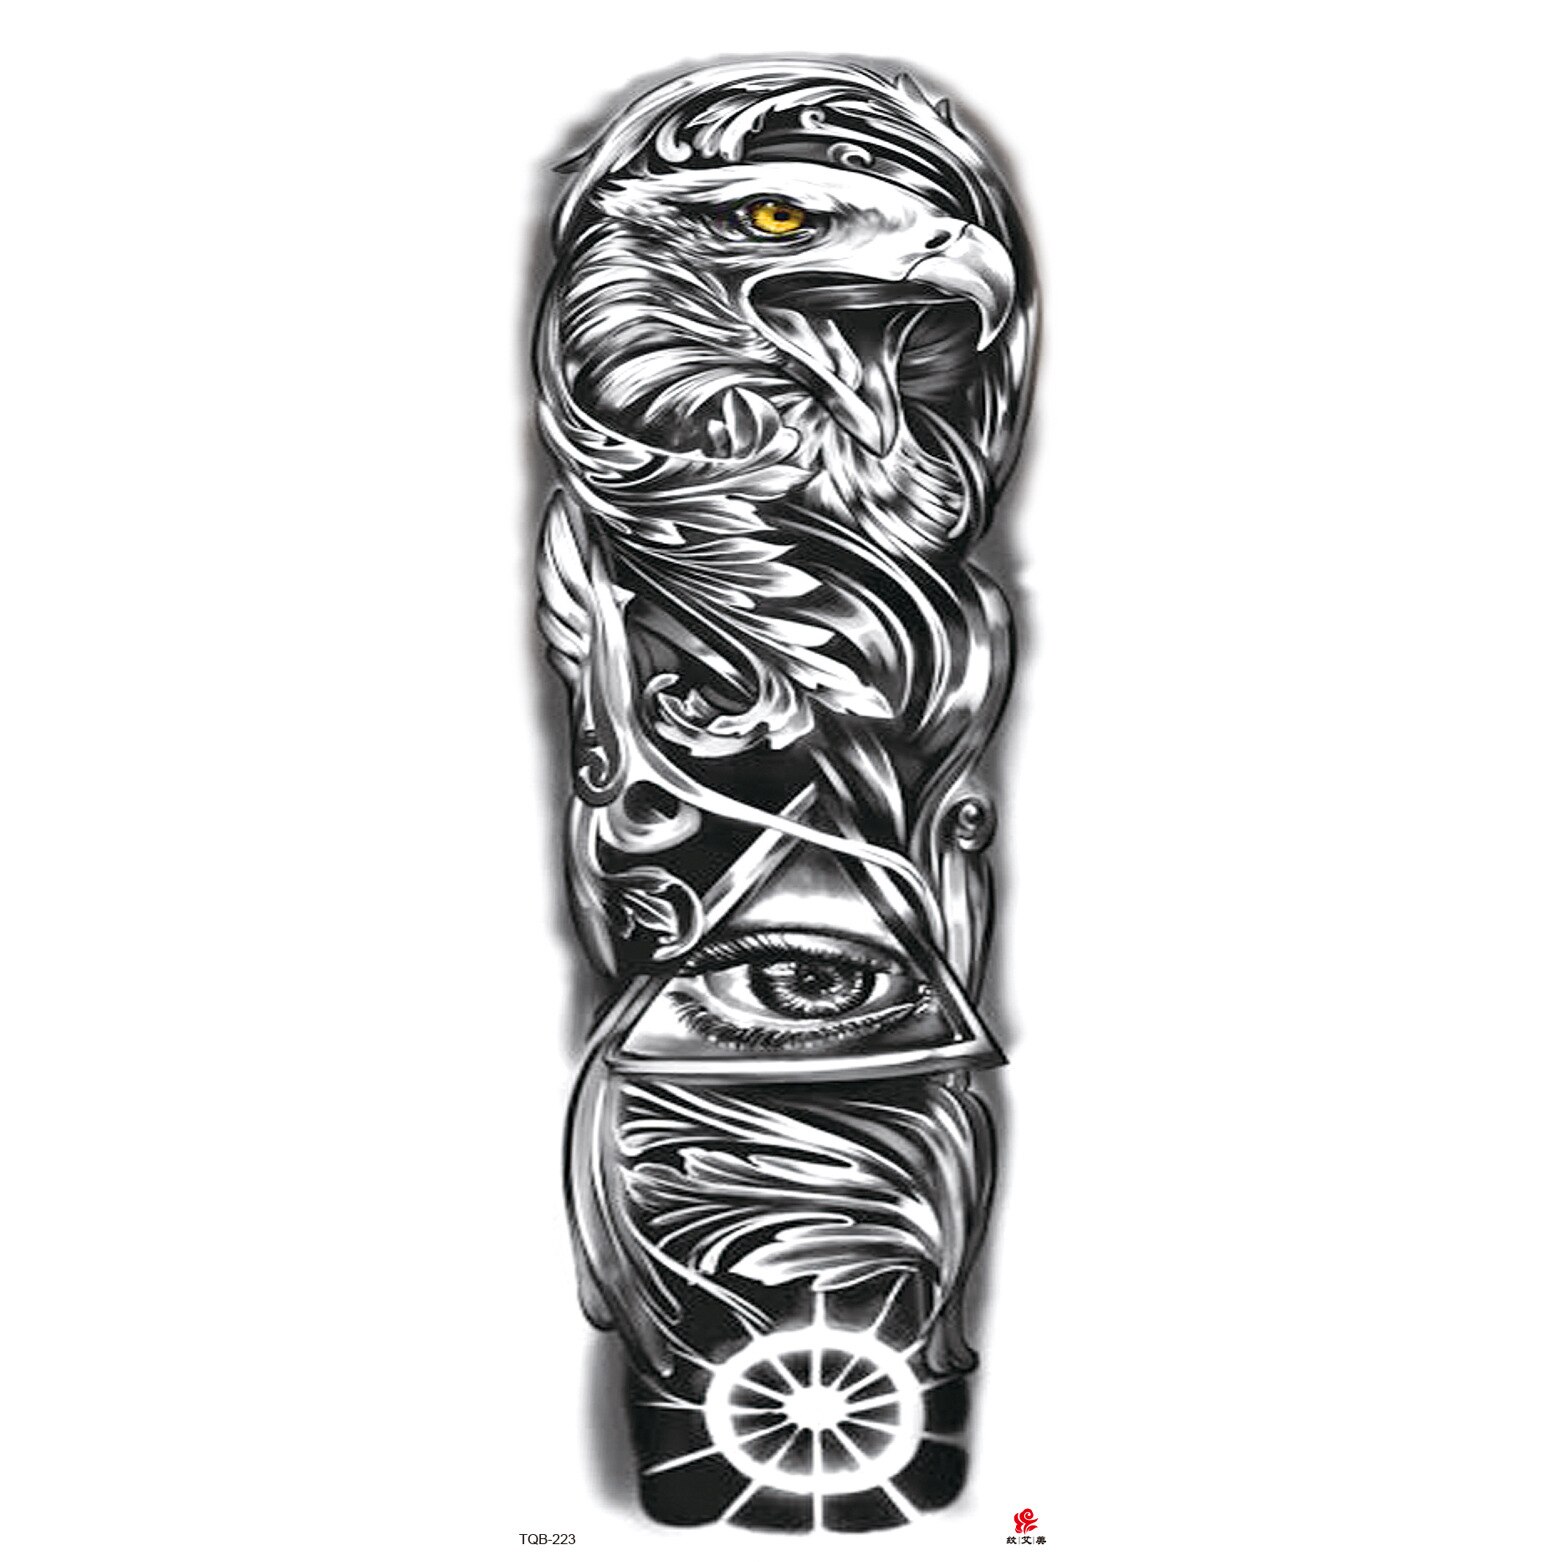 Waterproof Temporary Tattoo Sticker Totem Lion Crown Skull Full Arm Large Size Sleeve Fake Tattoo Flash Tattoo For Men Women